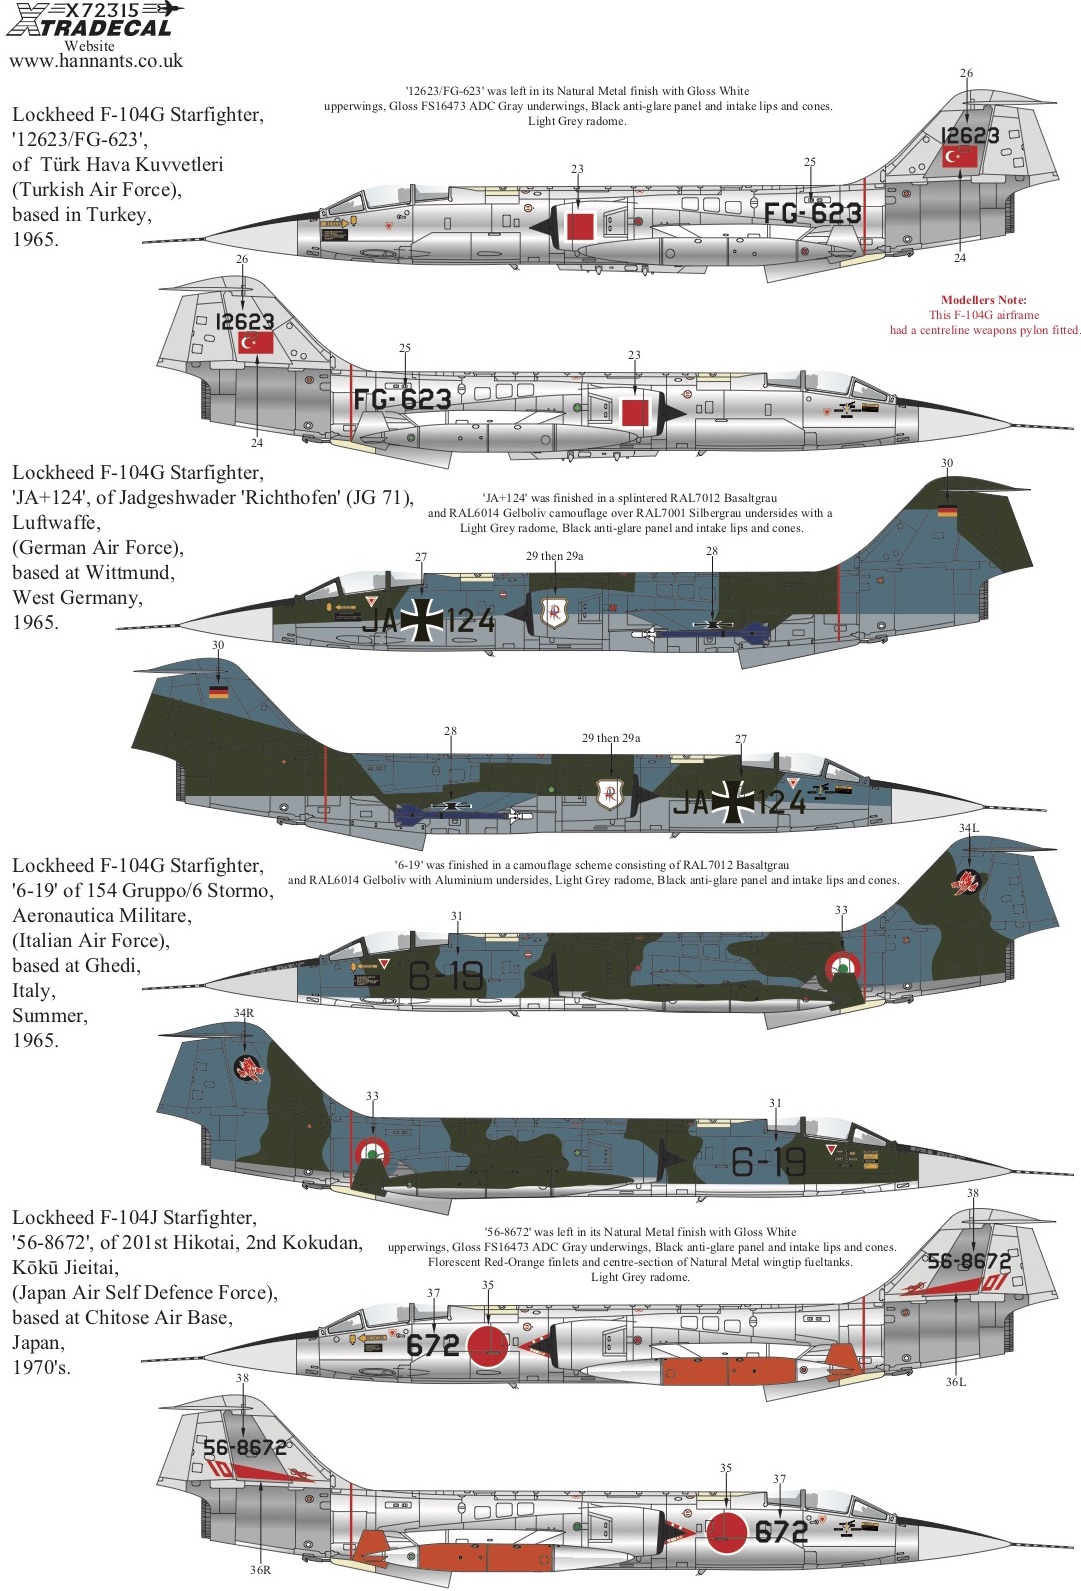 Xtra Decals 1/72 LOCKHEED F-104 STARFIGHTER COLLECTION Part 2 